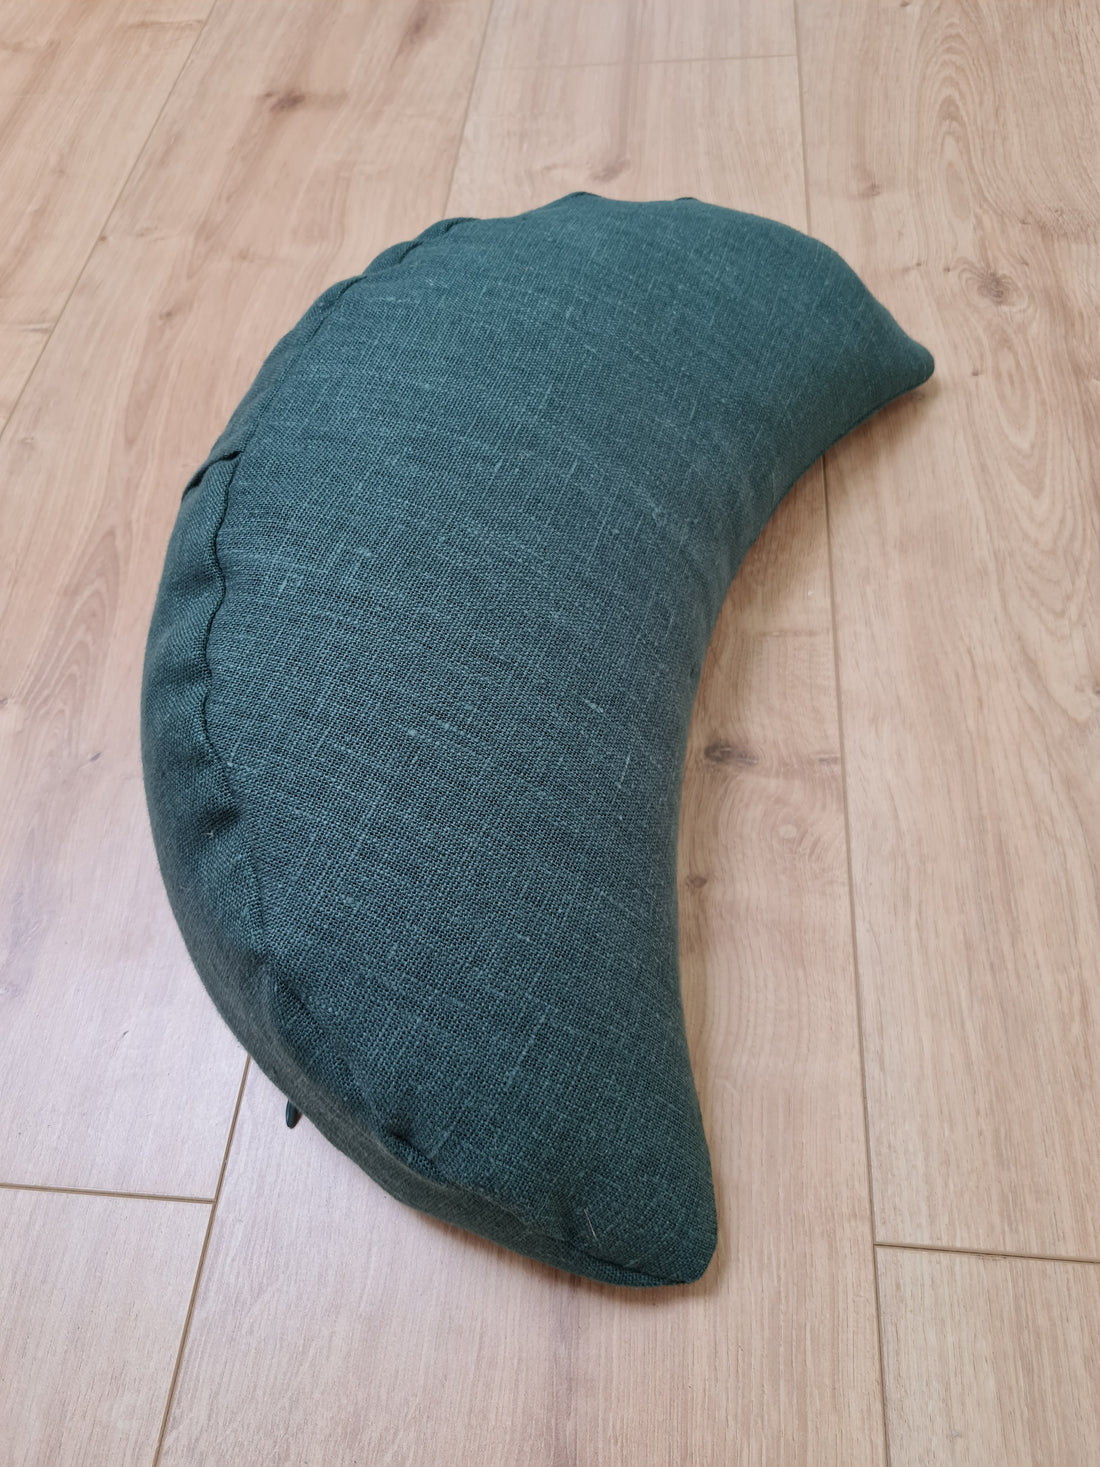 Linen Meditation Cresсent Cushion filled Buckwheat Hulls Yoga Crescent pillow